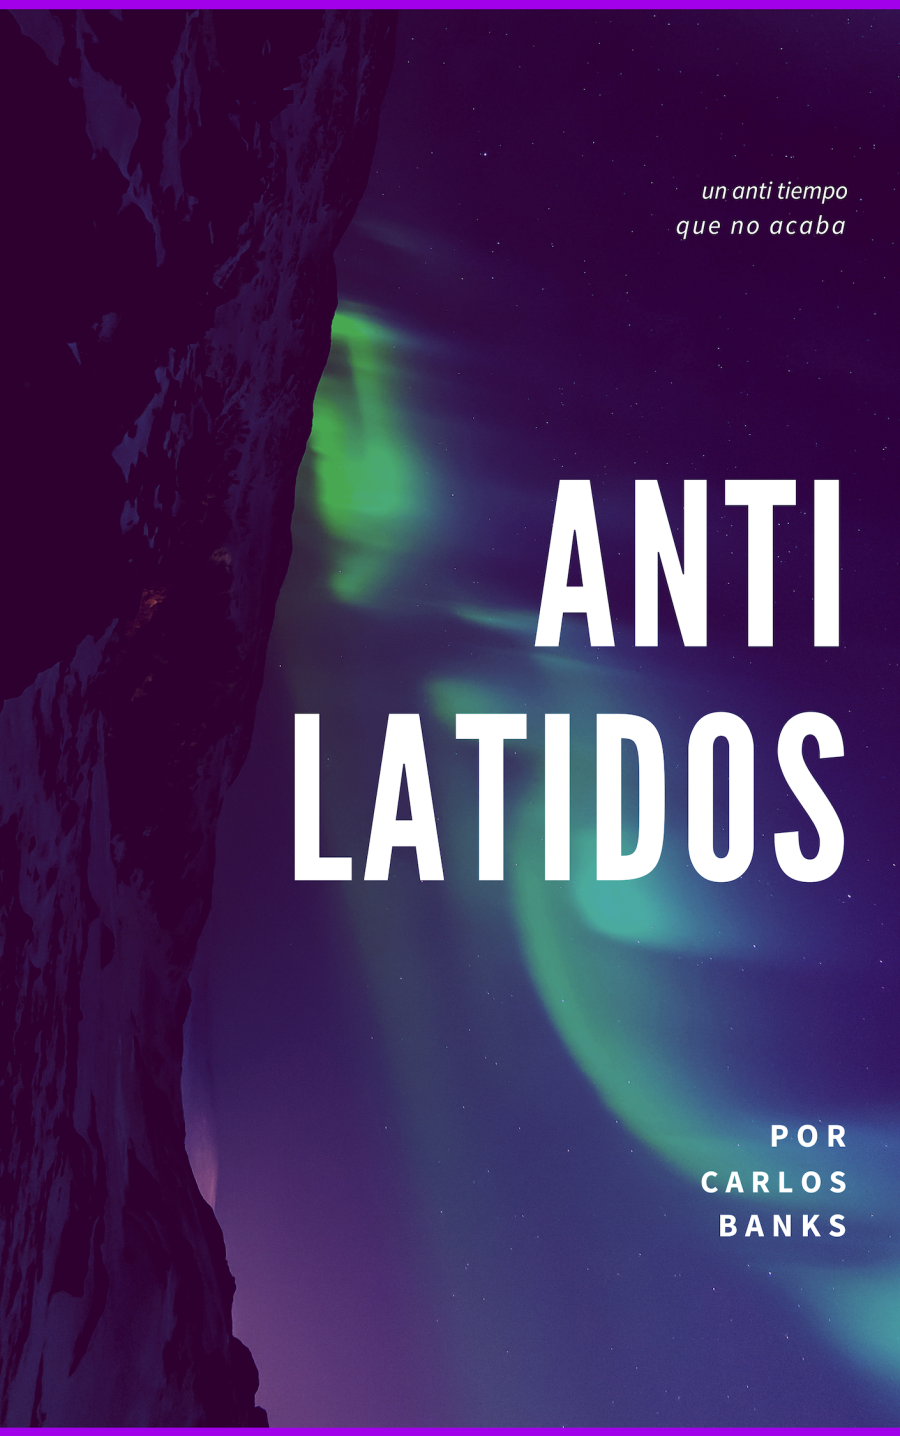 antilatidos3 (1).png